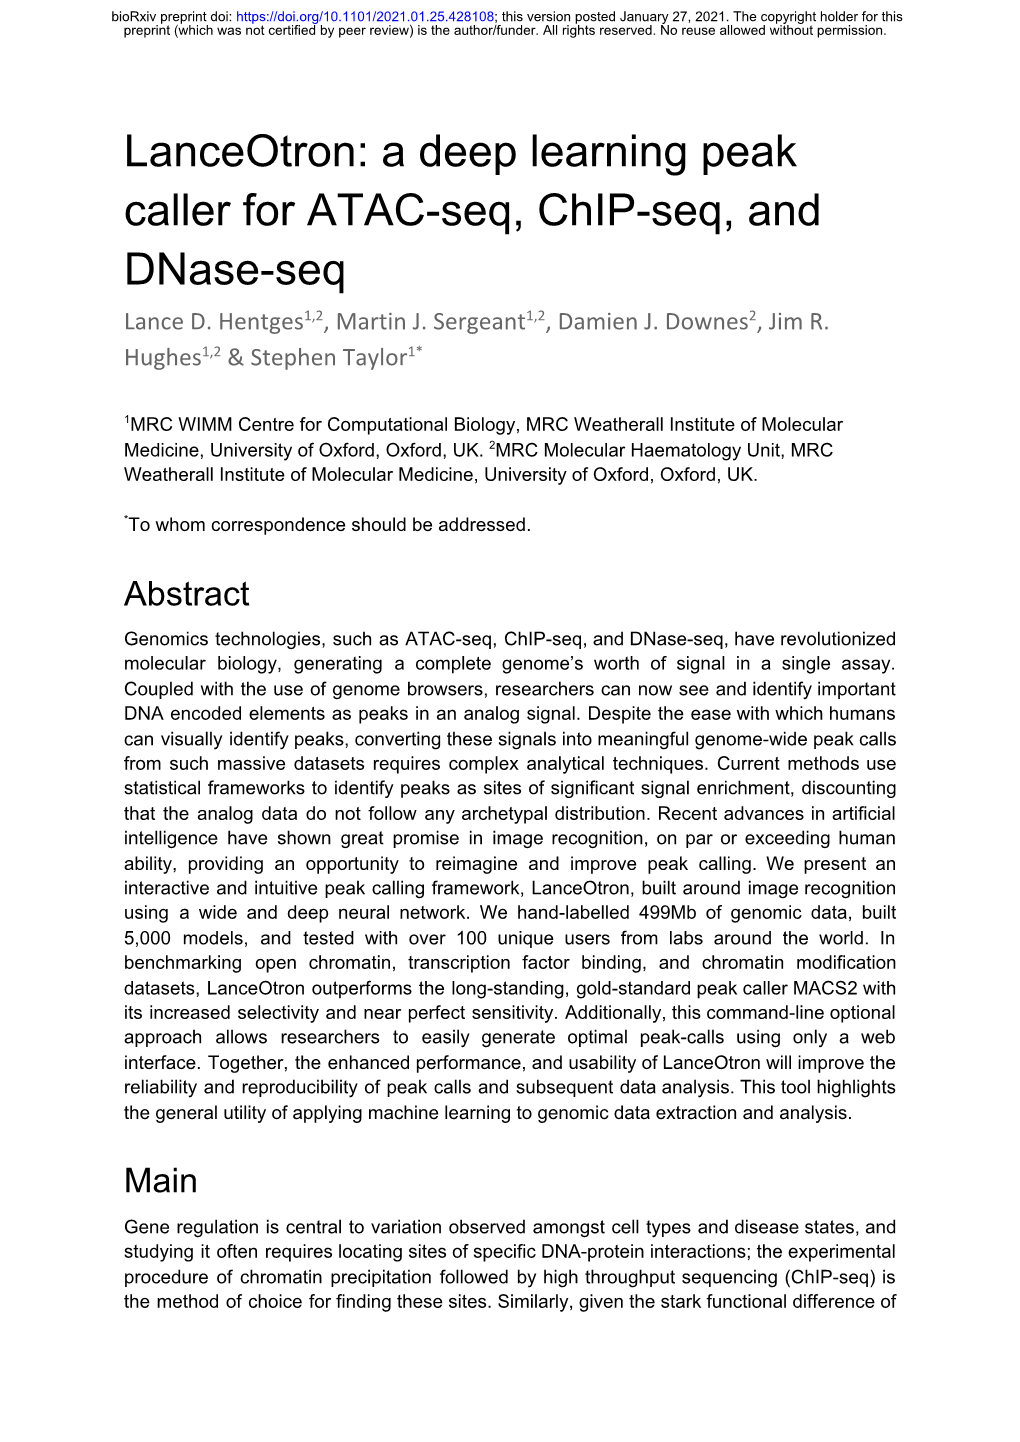 A Deep Learning Peak Caller for ATAC-Seq, Chip-Seq, and Dnase-Seq 1,2 1,2 2 Lance D